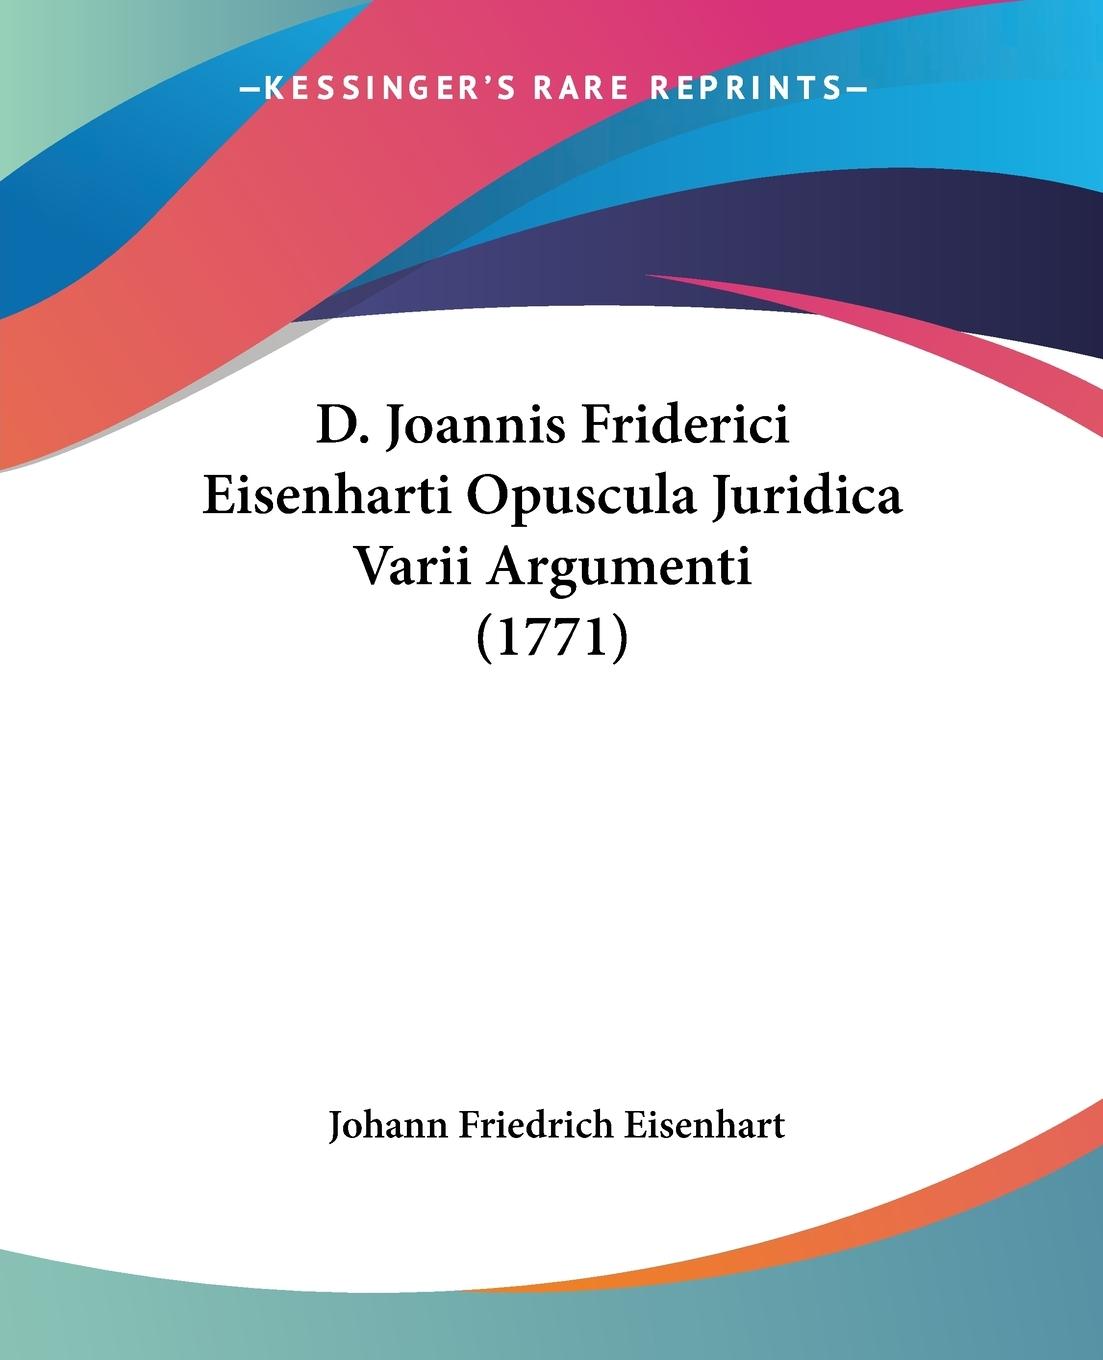 D. Joannis Friderici Eisenharti Opuscula Juridica Varii Argumenti (1771) - Eisenhart, Johann Friedrich